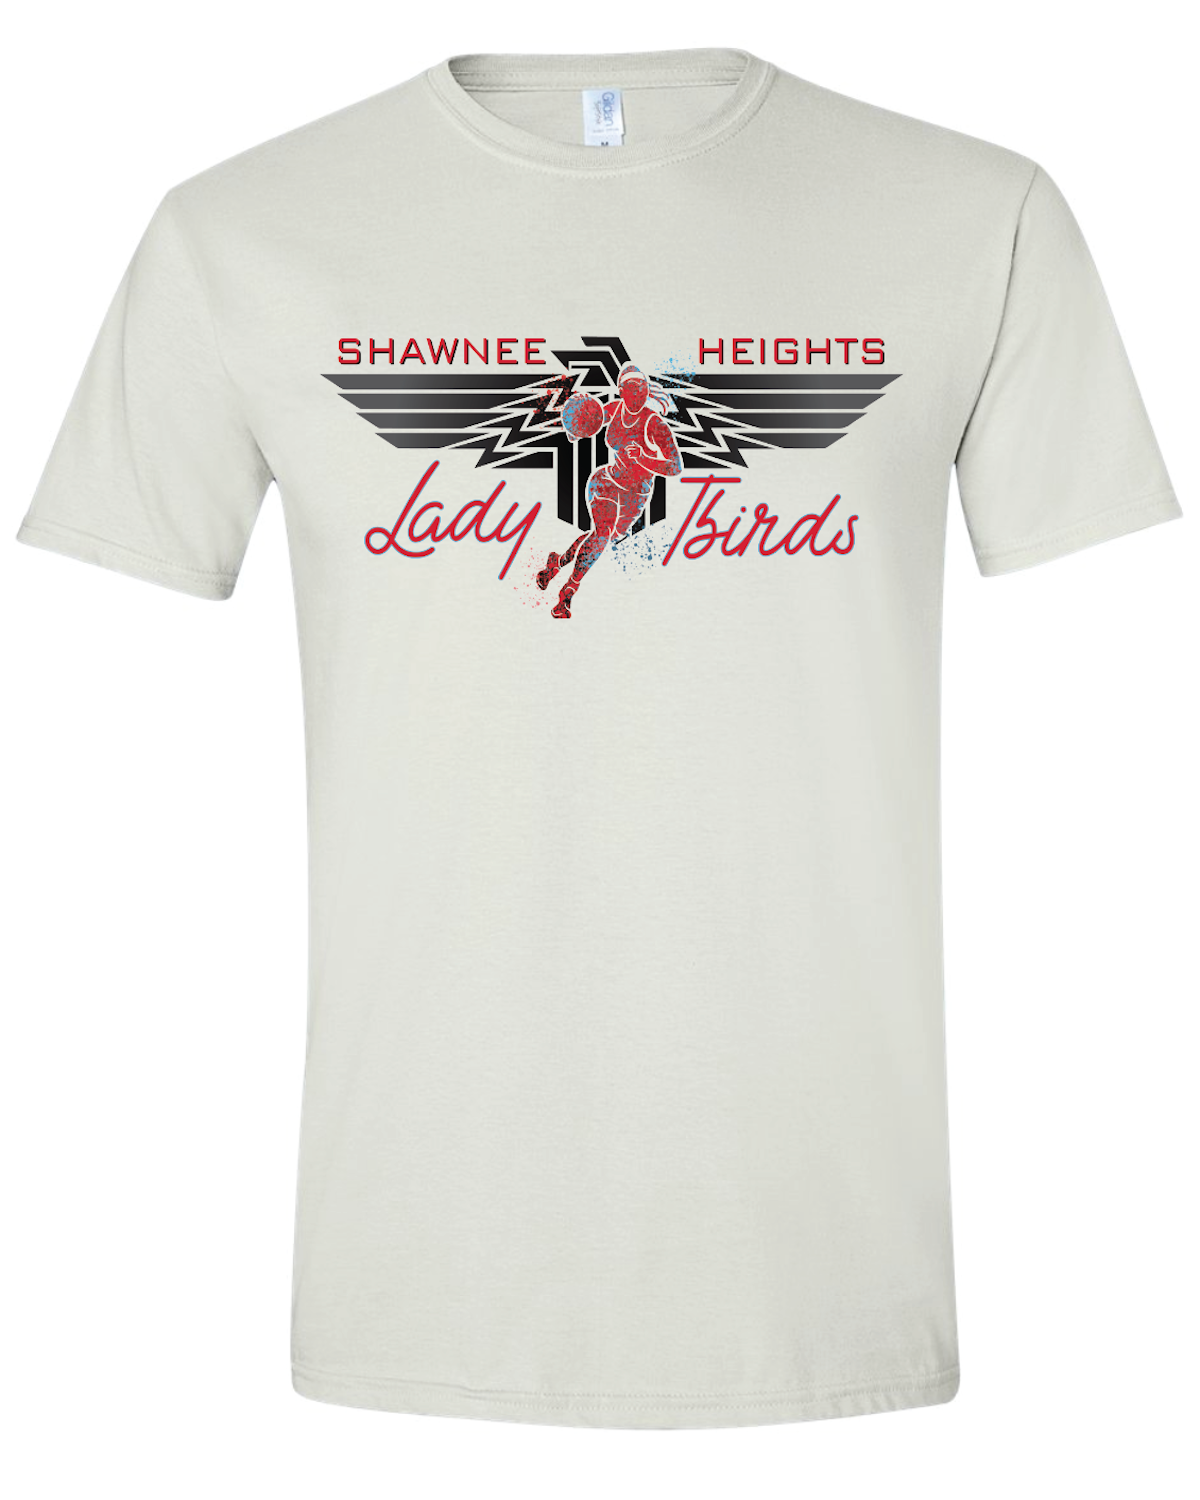 Shawnee Heights Lady Tbirds Basketball Gildan Softstyle T-Shirt